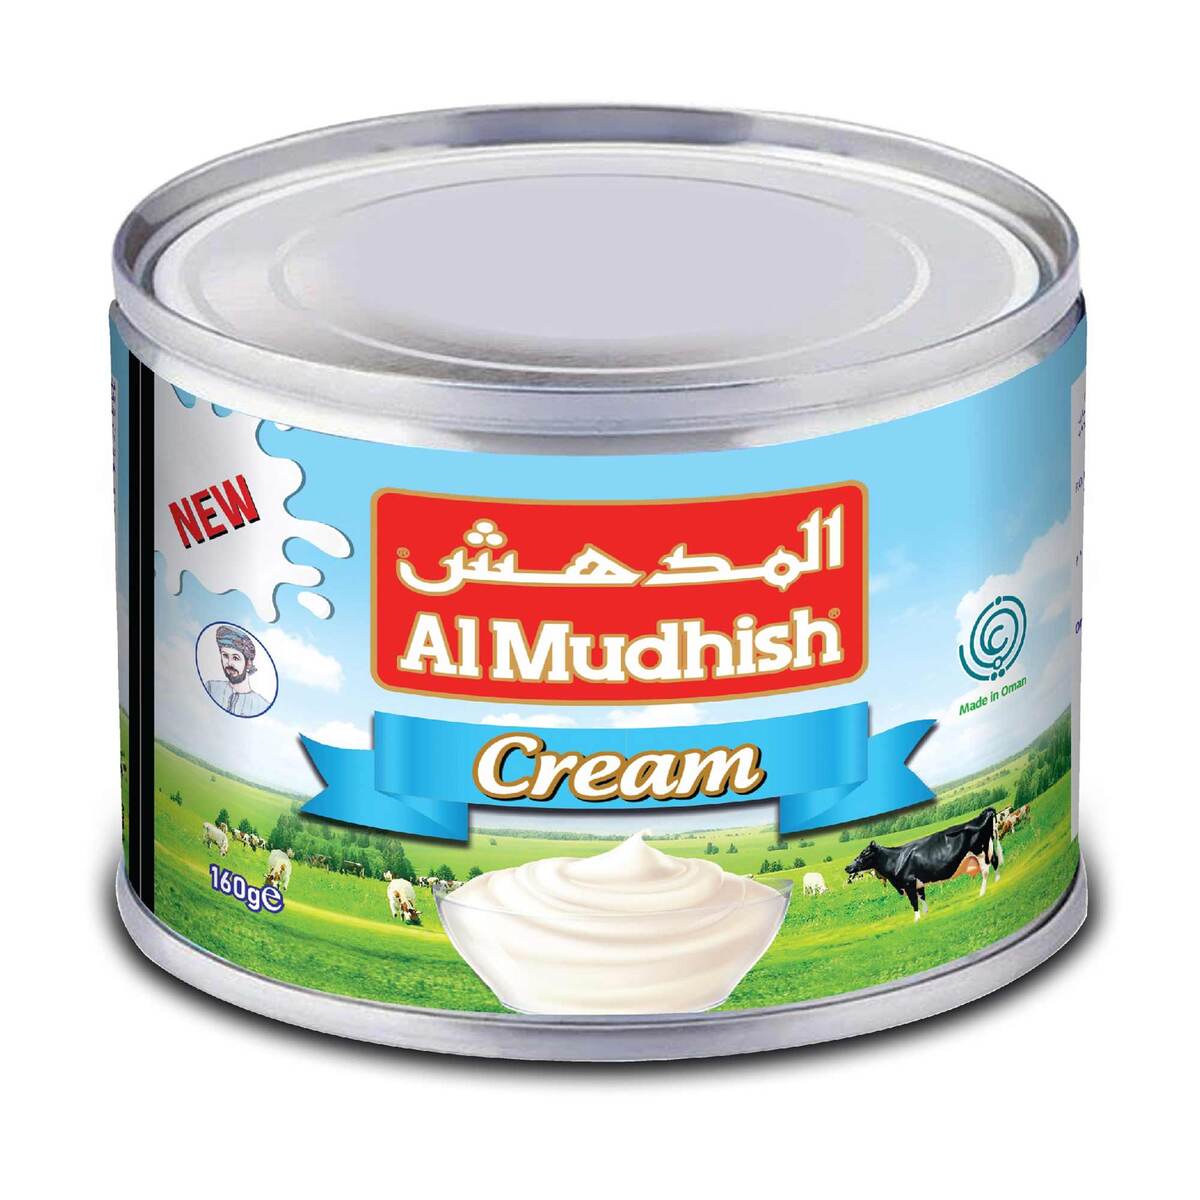 Al Mudhish Cream 160 g 4+2